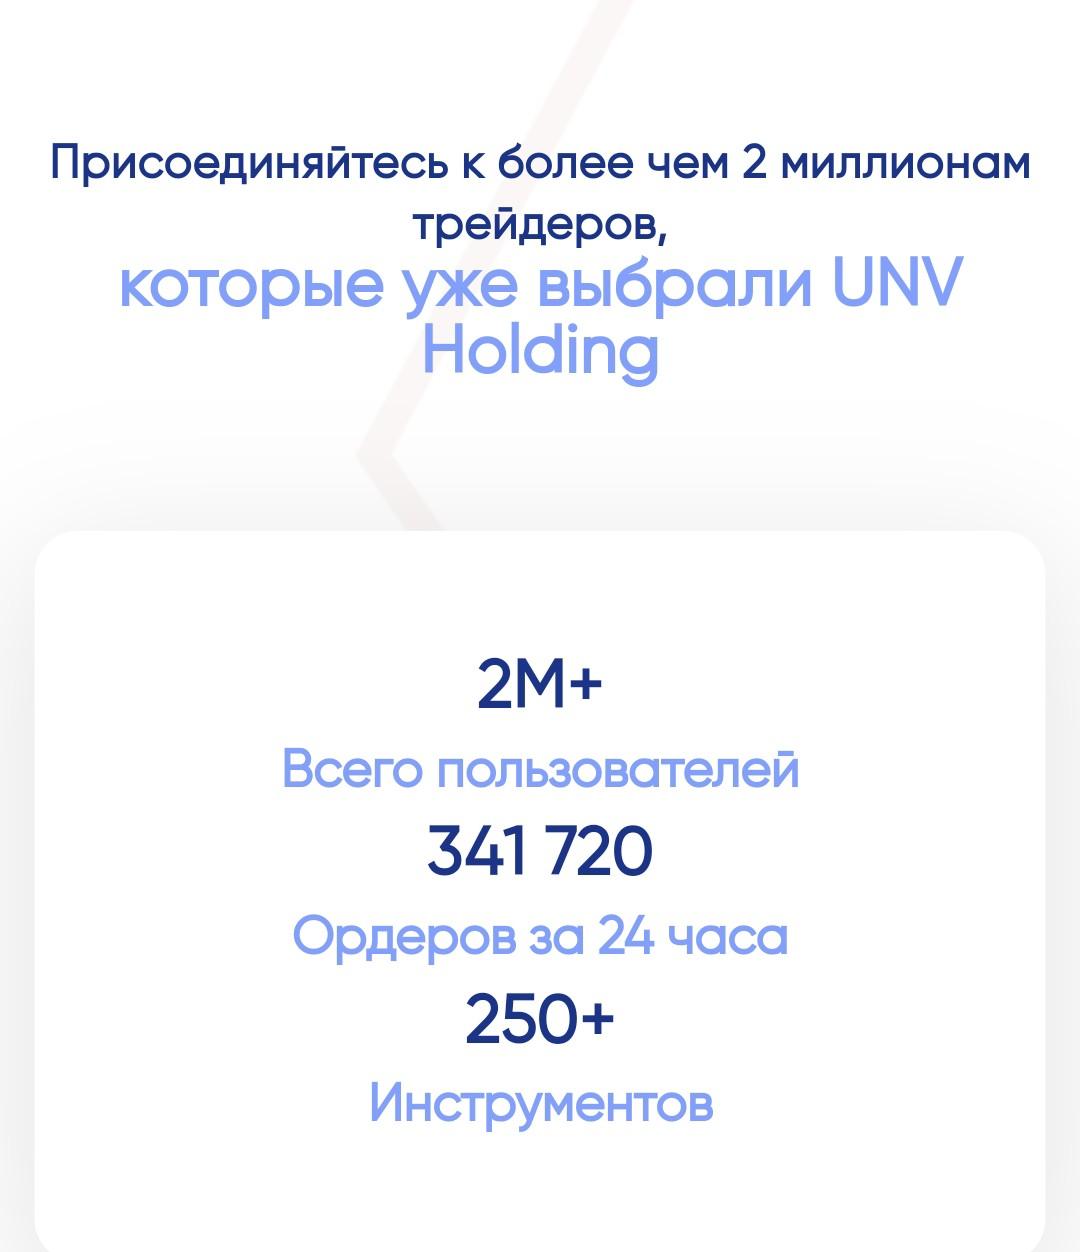 Unv Holding - статистика